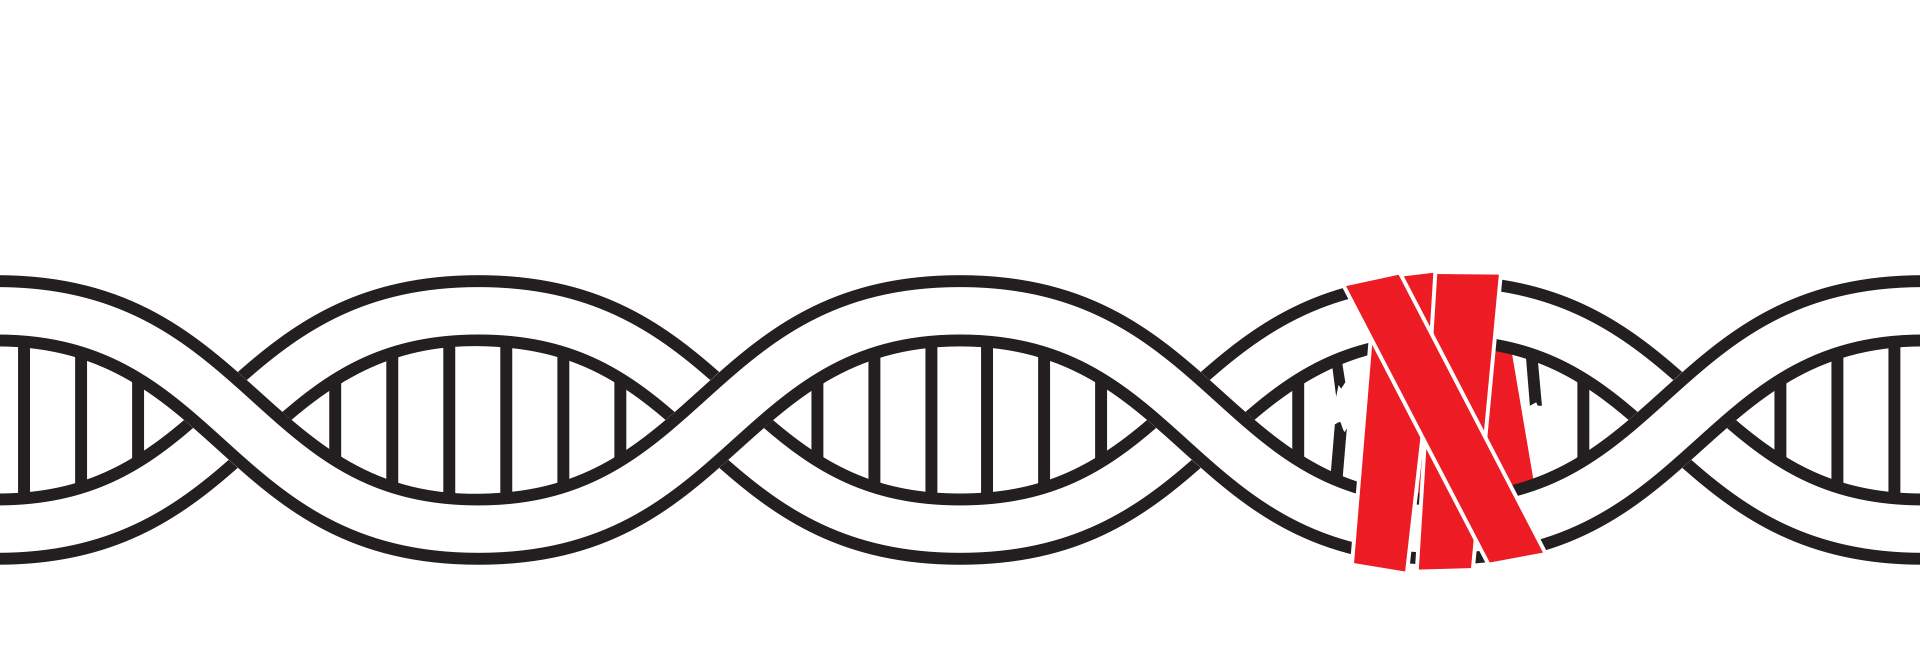 Gene editing. Image: Shutterstock